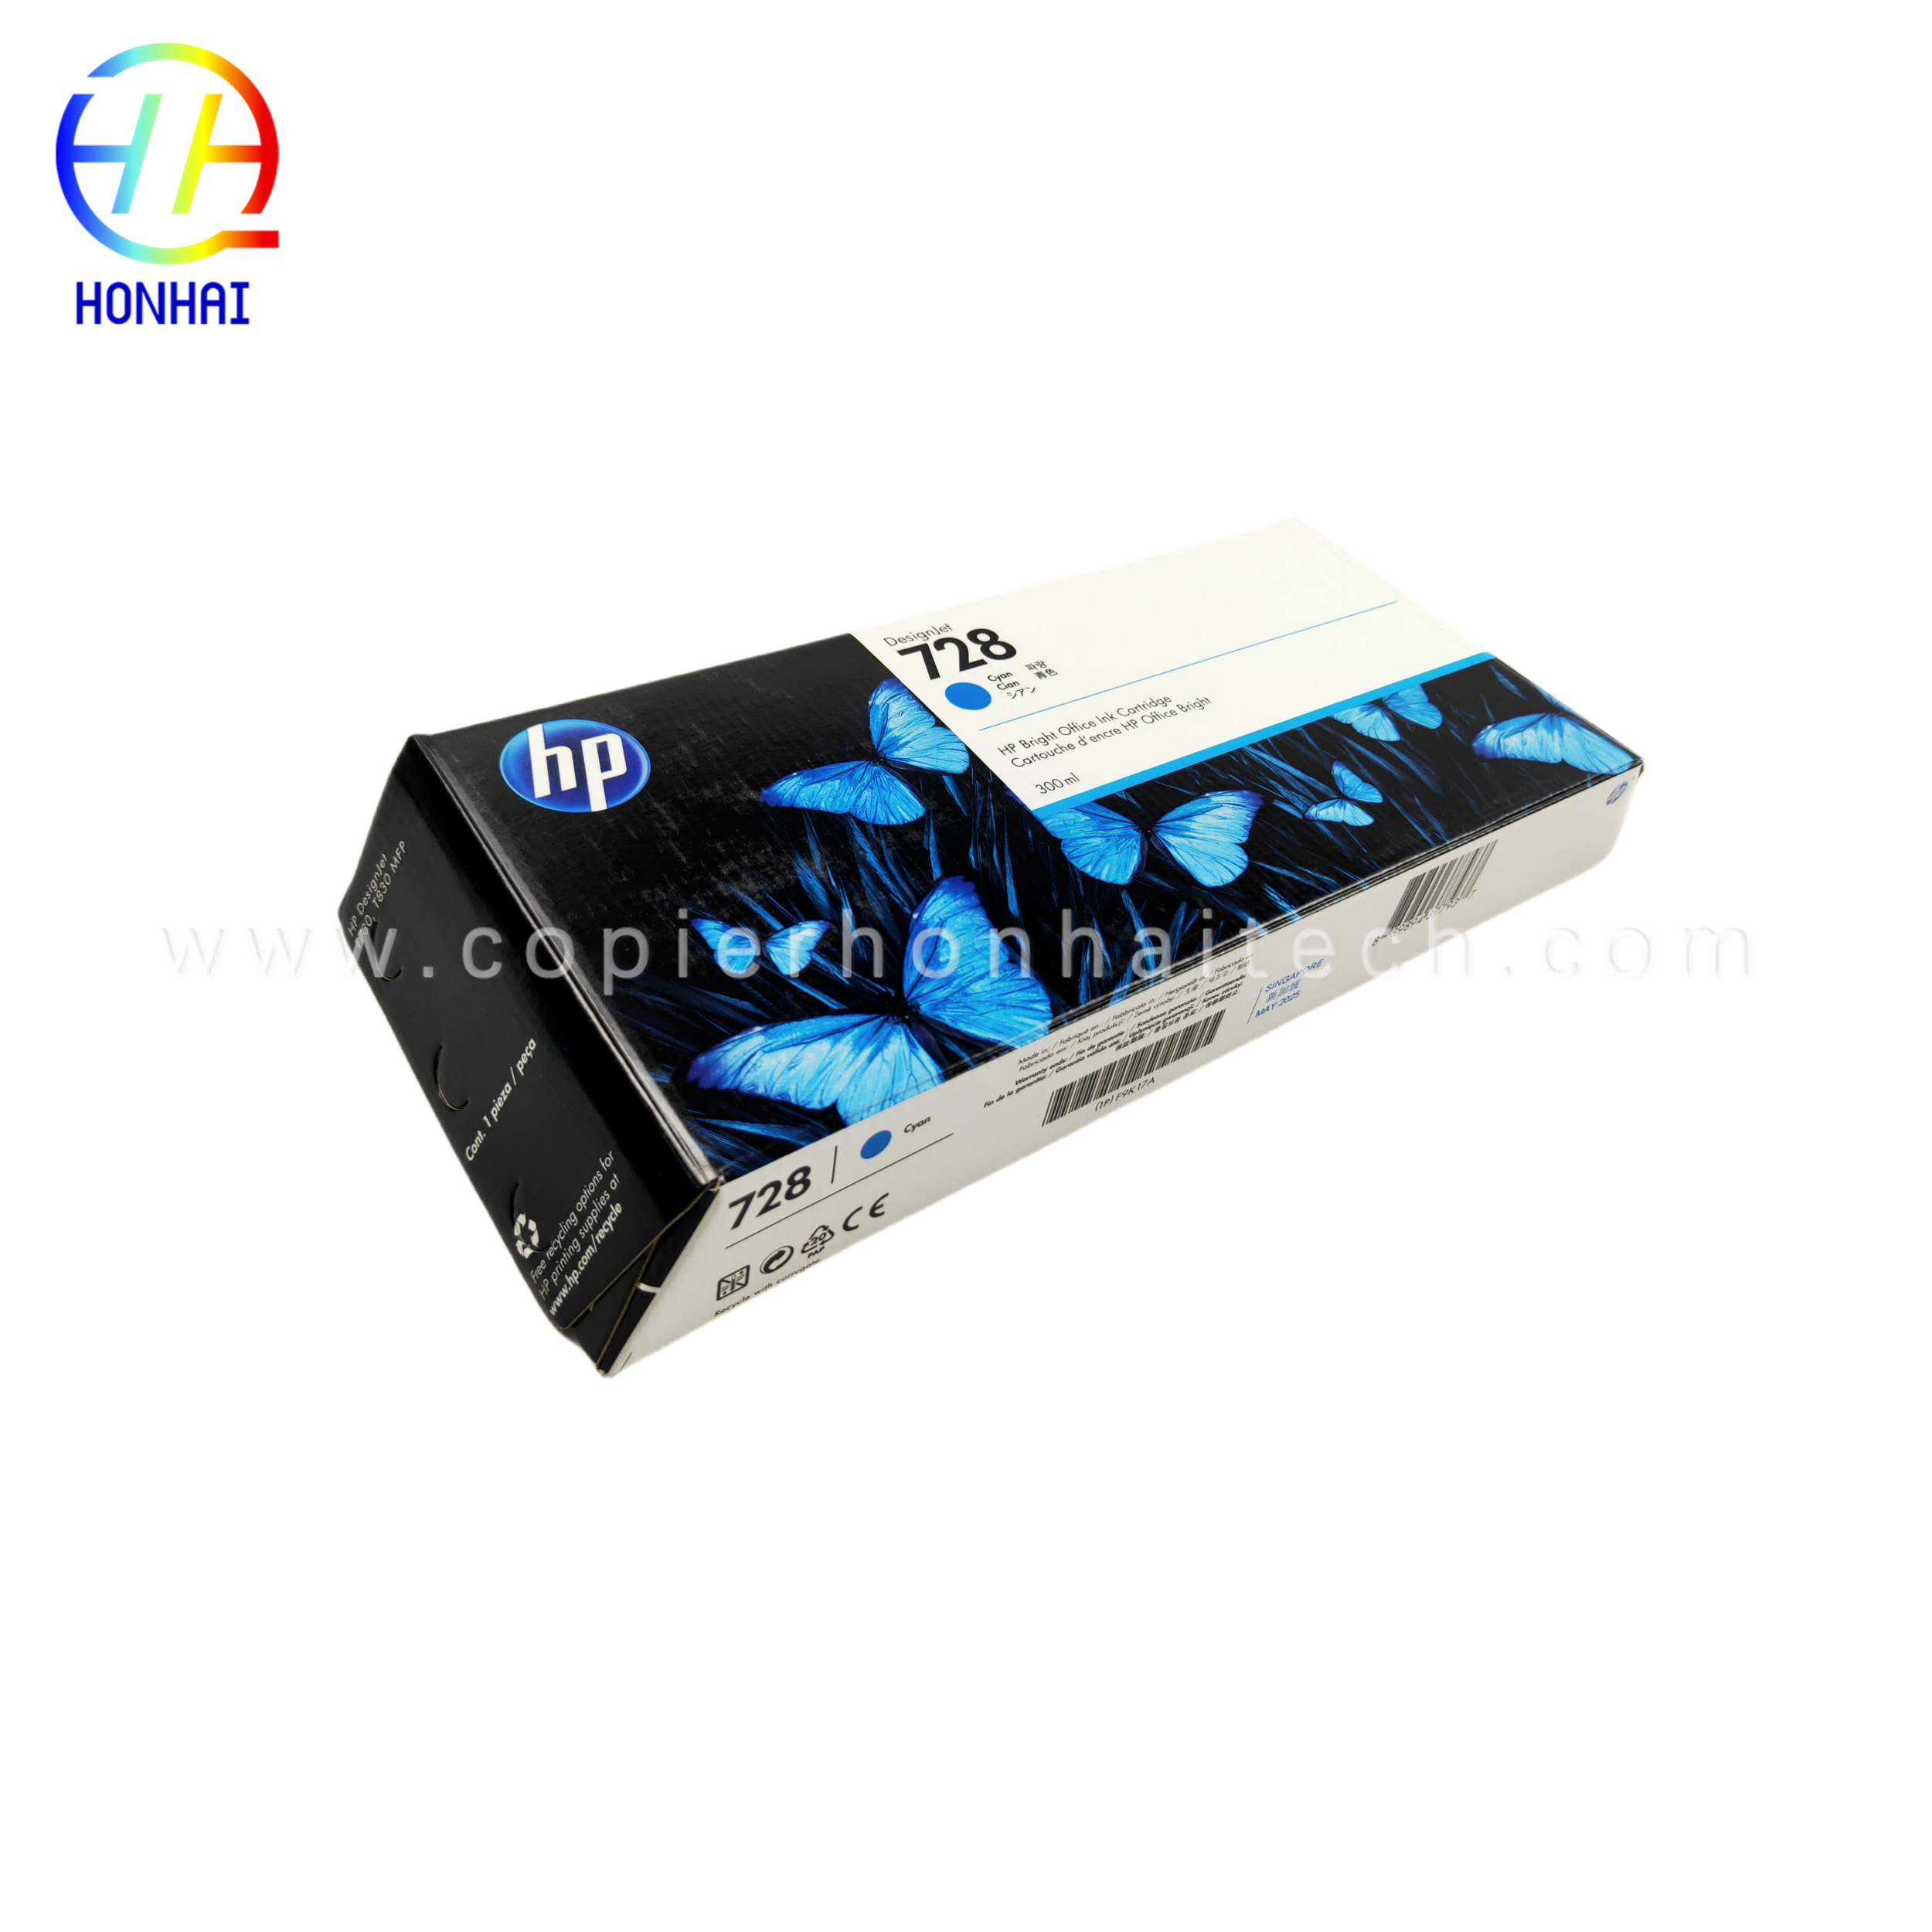 https://www.copierhonhaitech.com/original-new-ink-cartridge-cyan-for-hp-designjet-t730-and-t830-large-format-plotter-printers-and-hp-729-designjet-printhead- 728-f9k17a-ຜະລິດຕະພັນ/